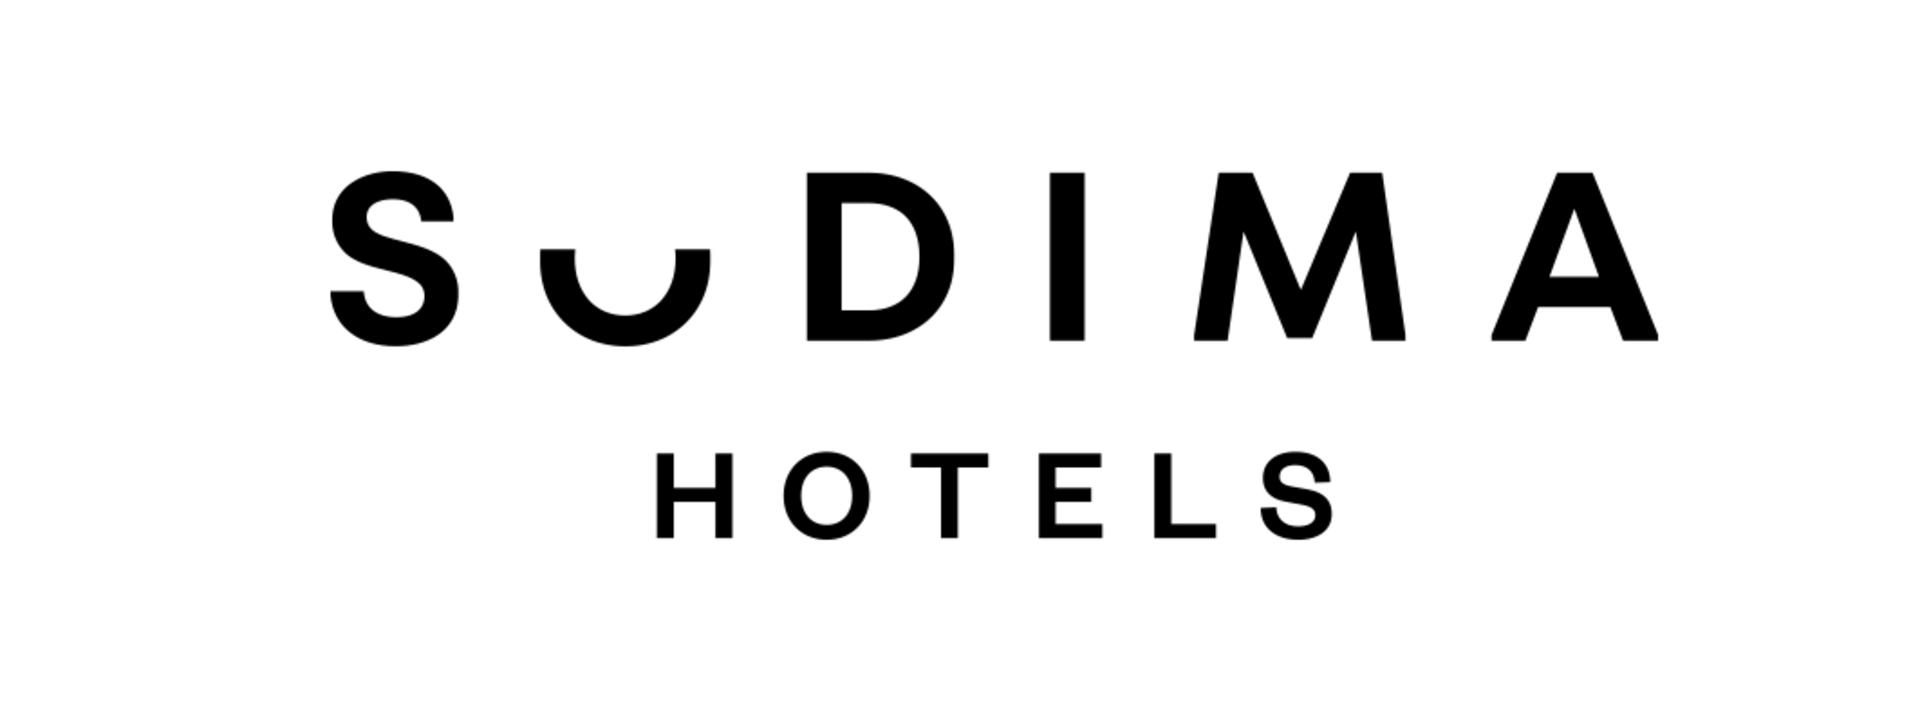 sudima-hotels-master-black-jpeg_6.jpg